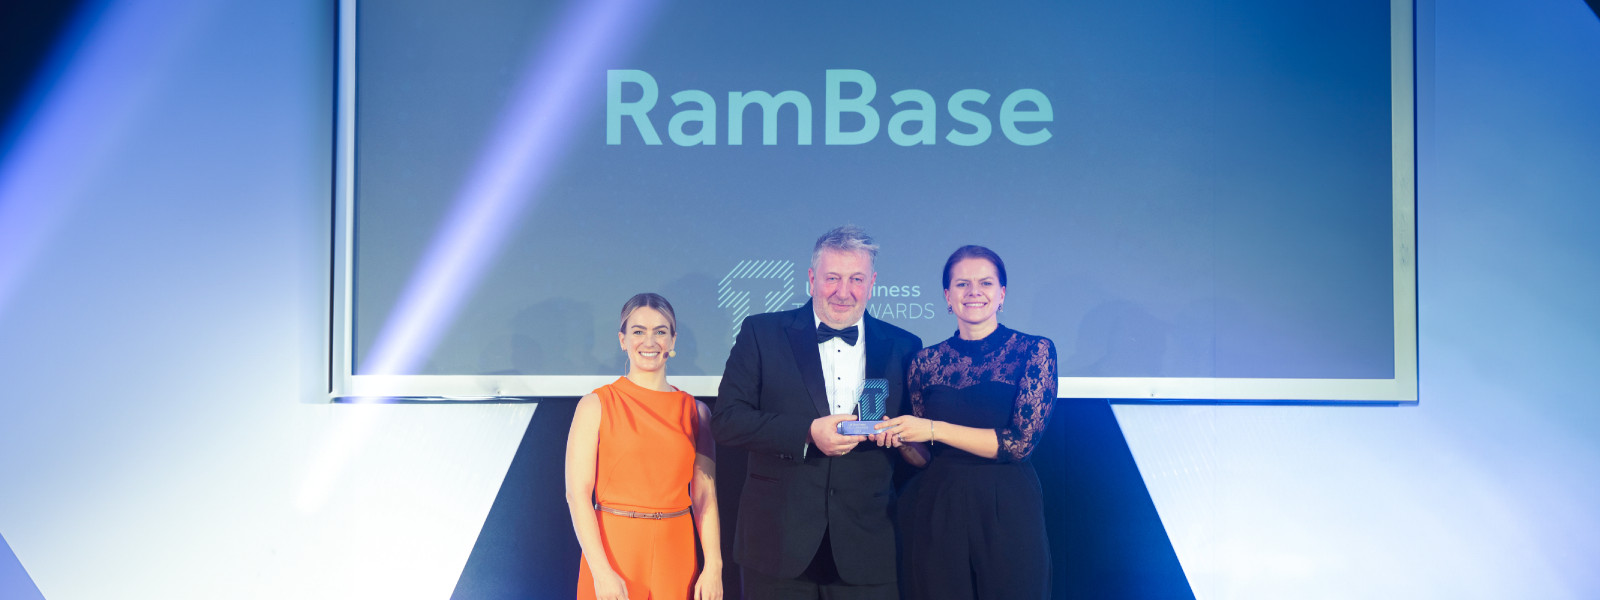 RamBase Announced Winner of UK Business Tech Award...